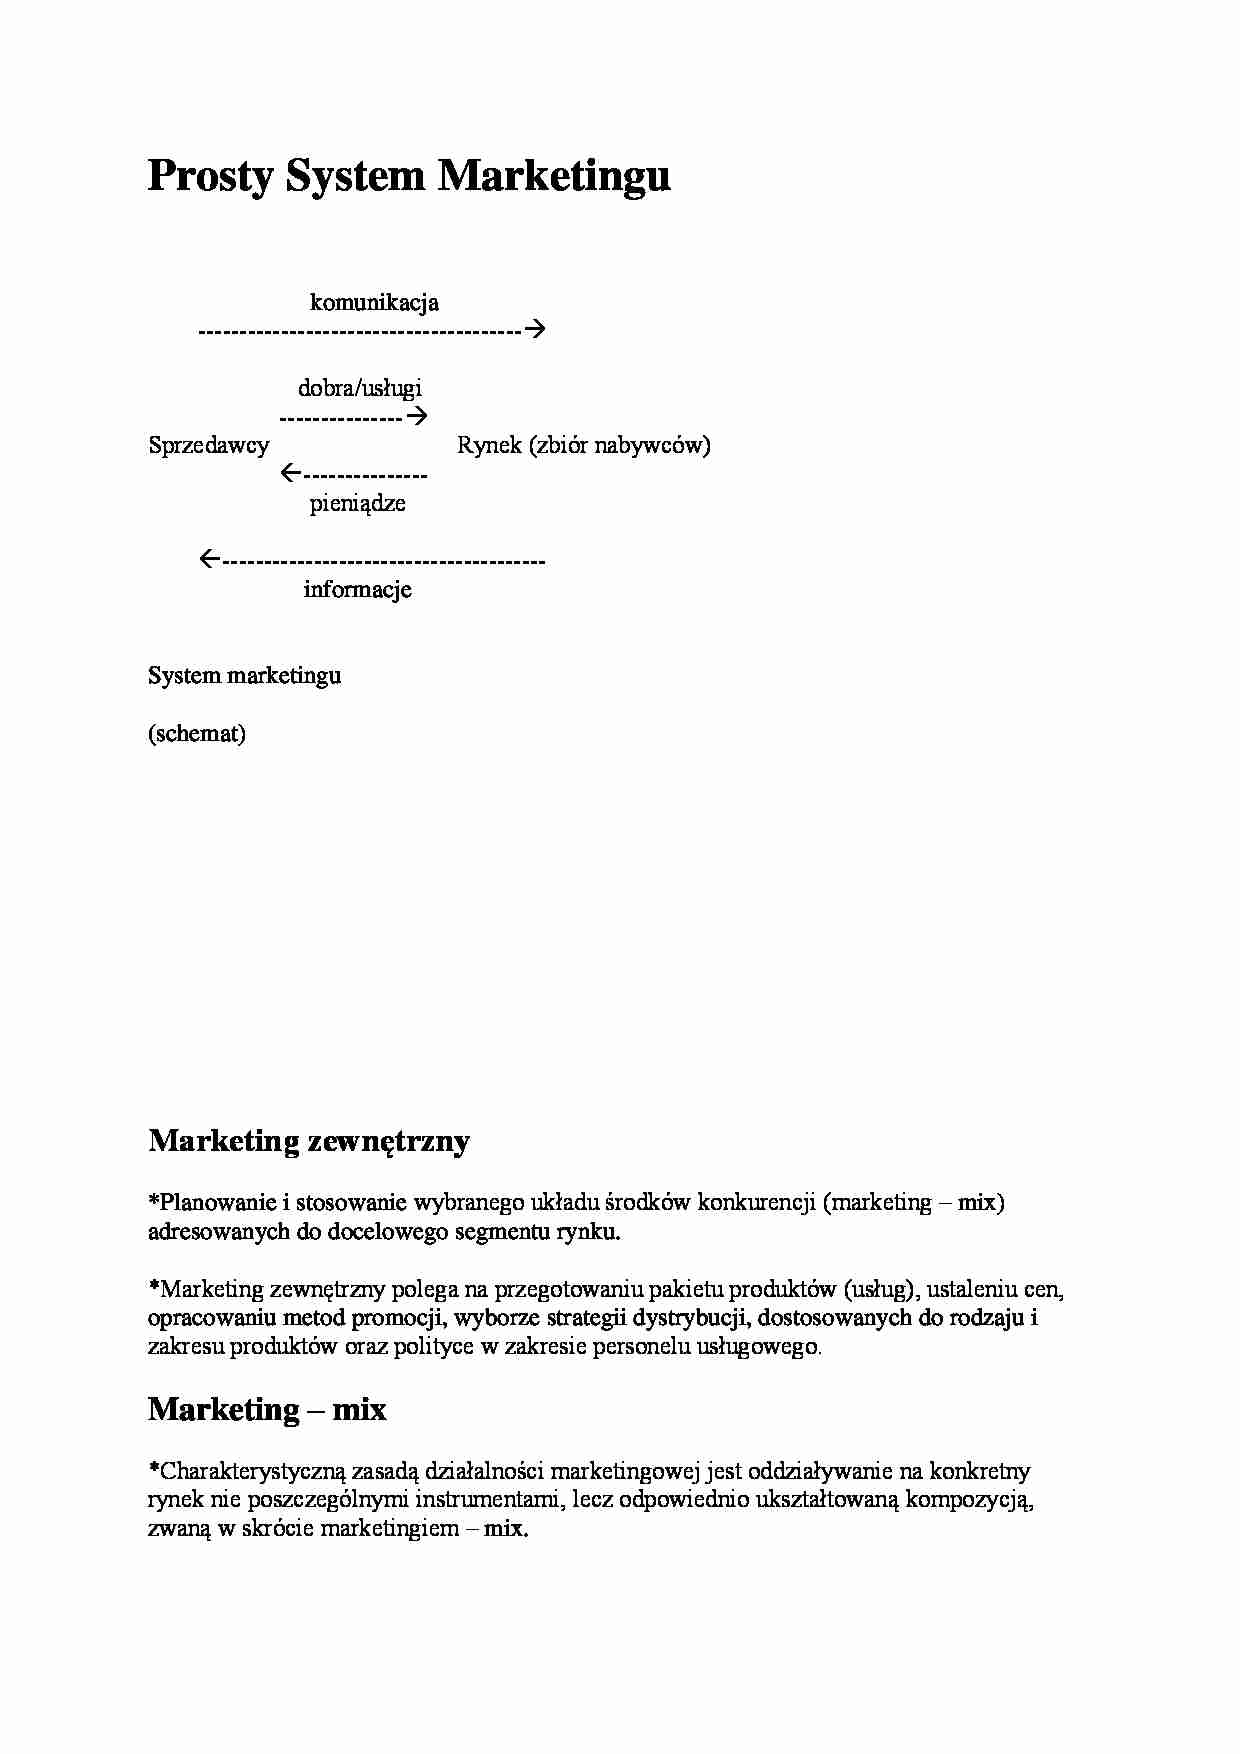 Prosty System Marketingu - strona 1